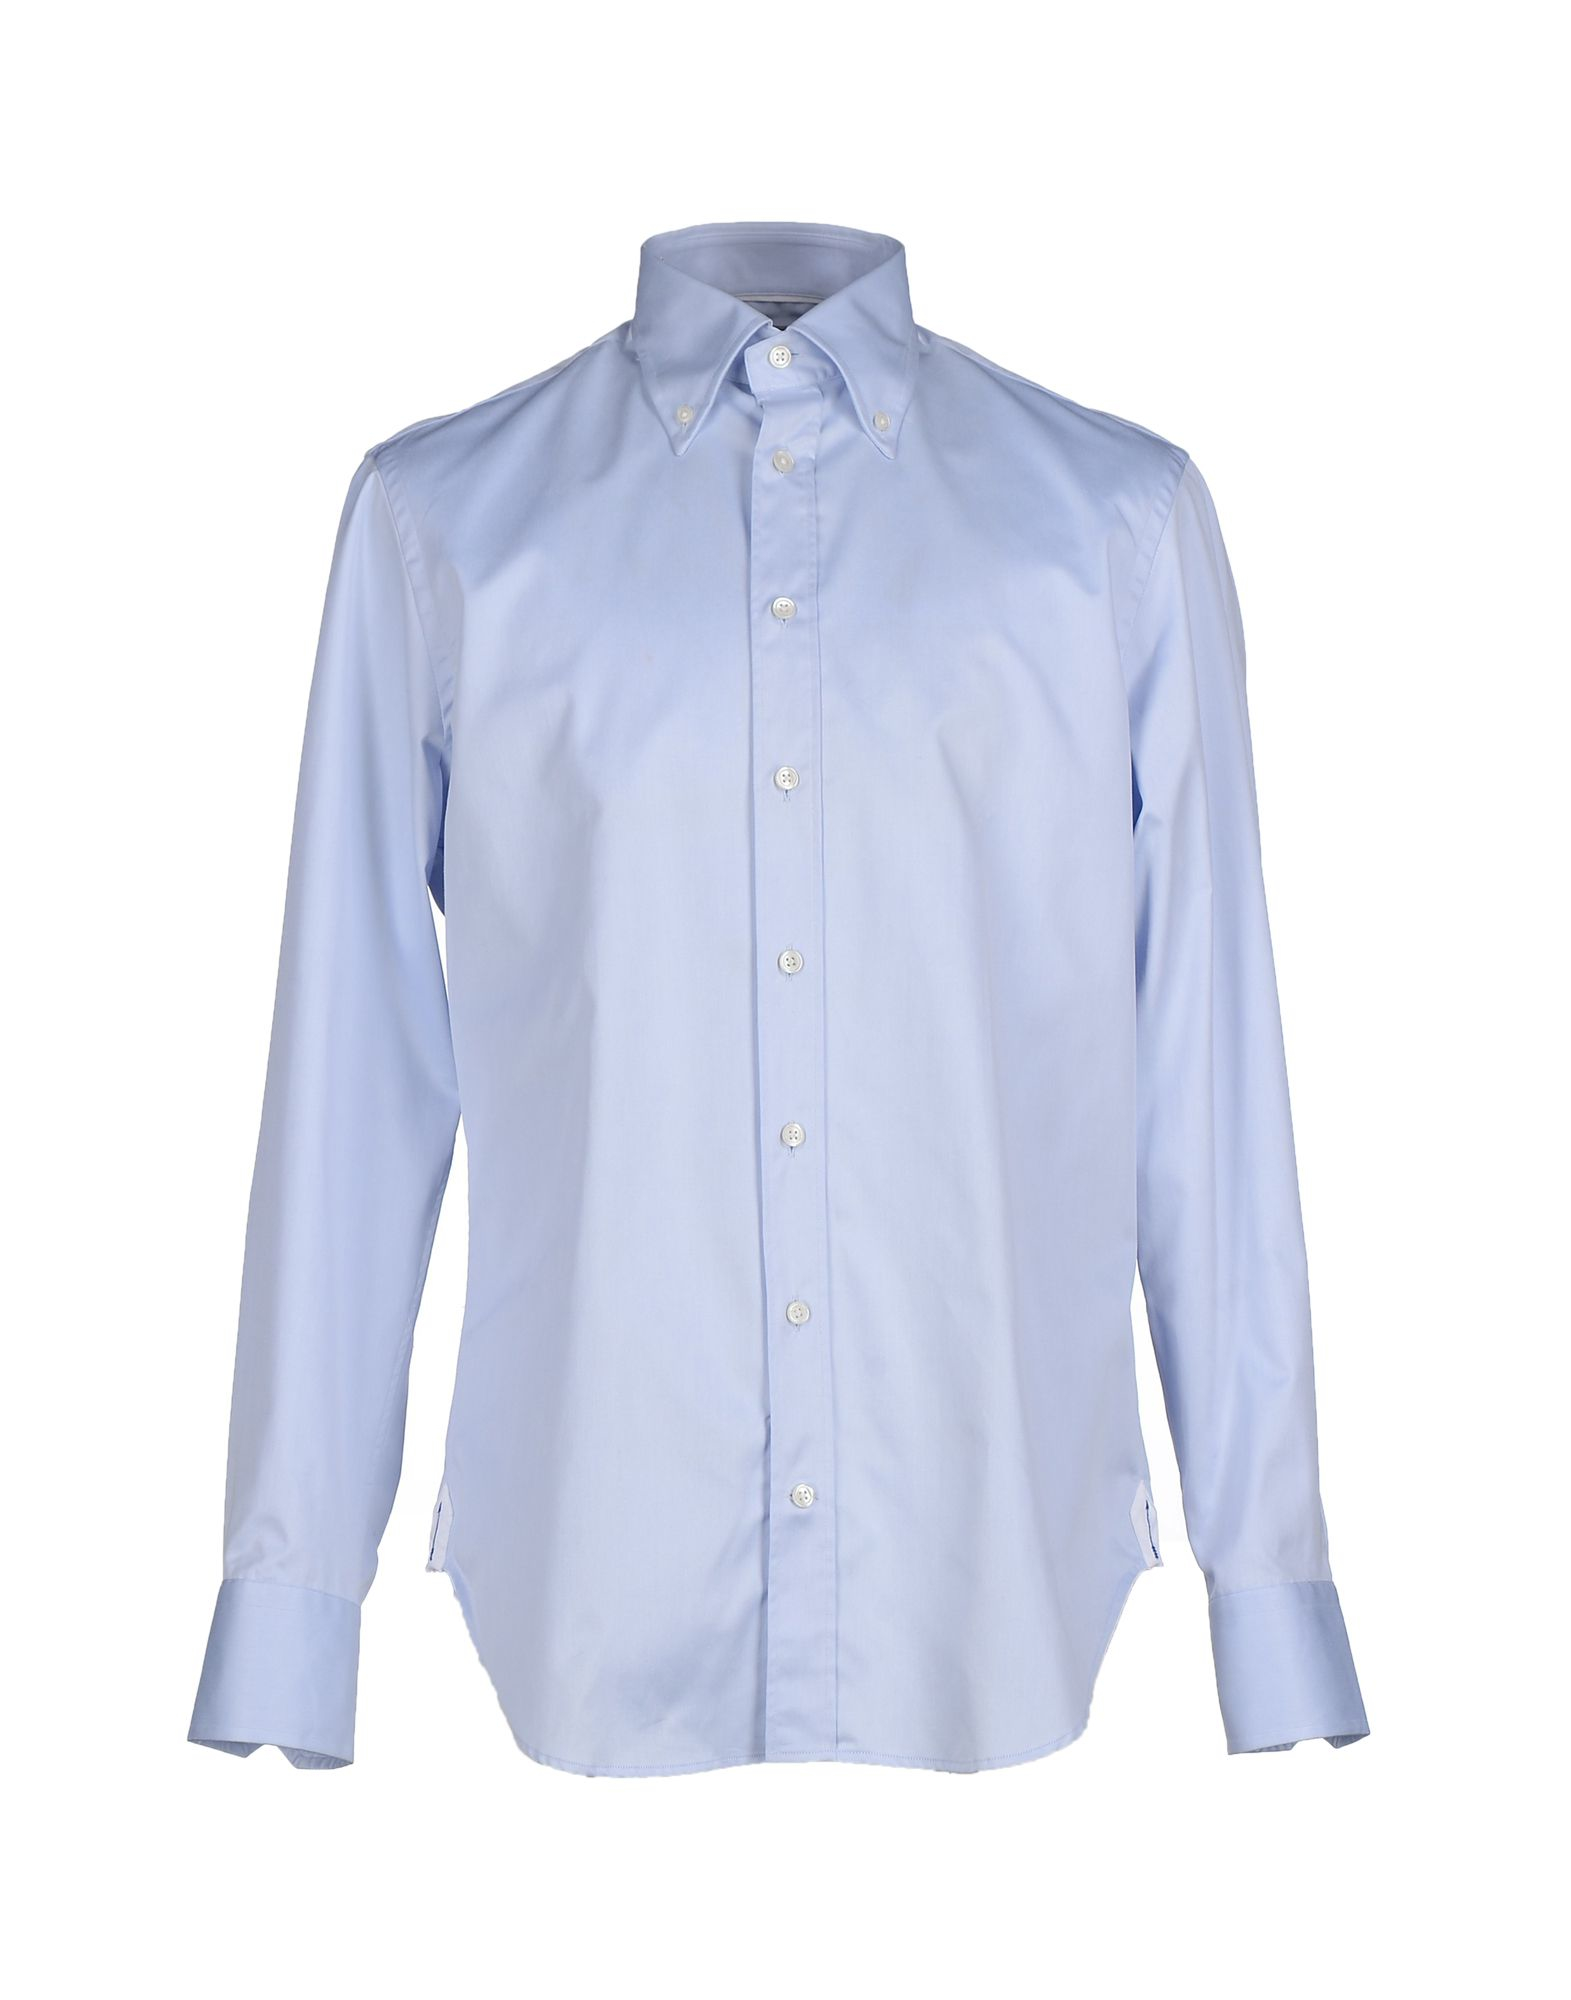 Lyst - Arrow Shirt in Blue for Men